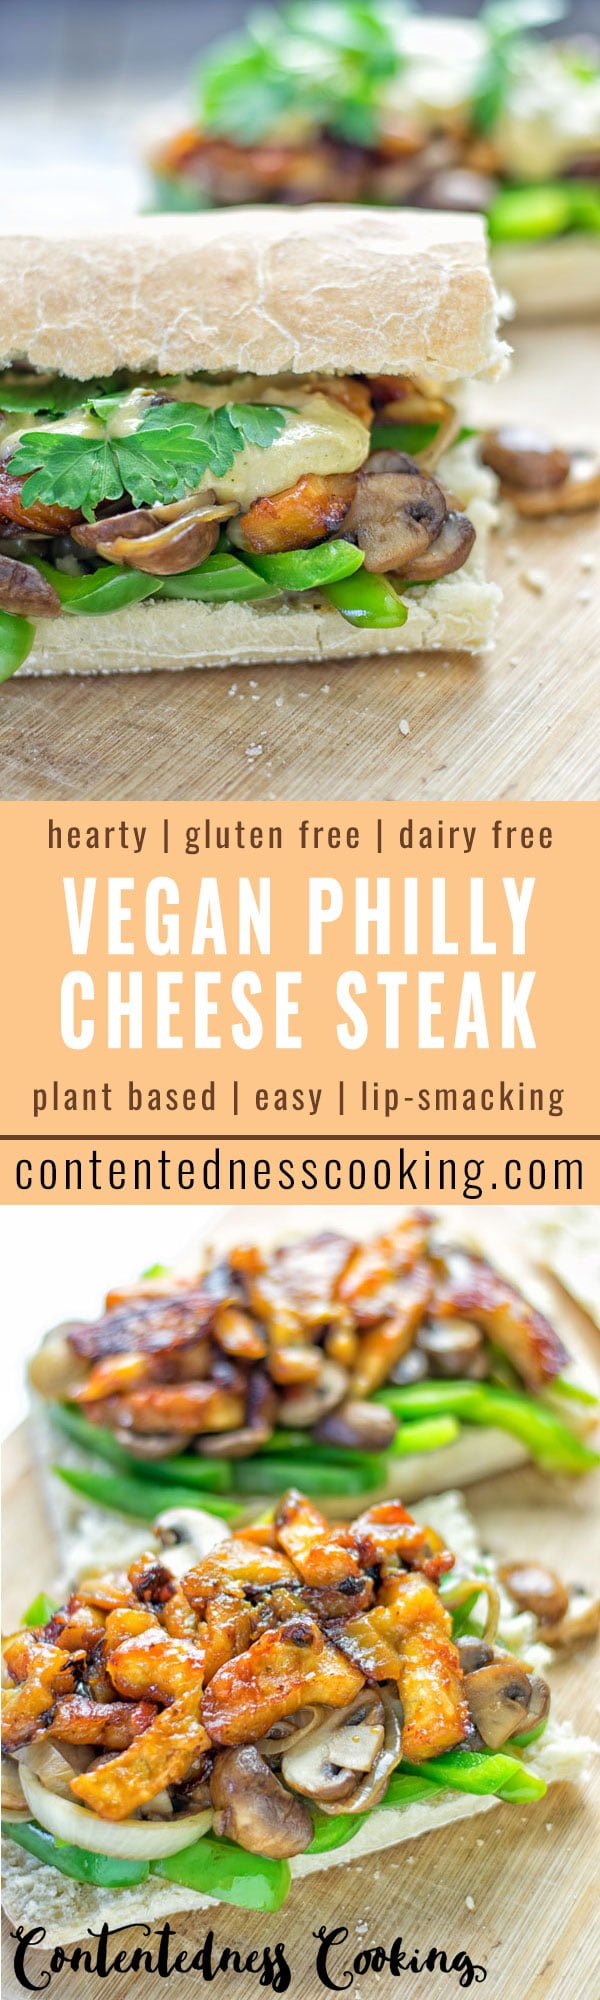 Vegan Philly Cheese Steak | #vegan #glutenfree #contentednesscooking